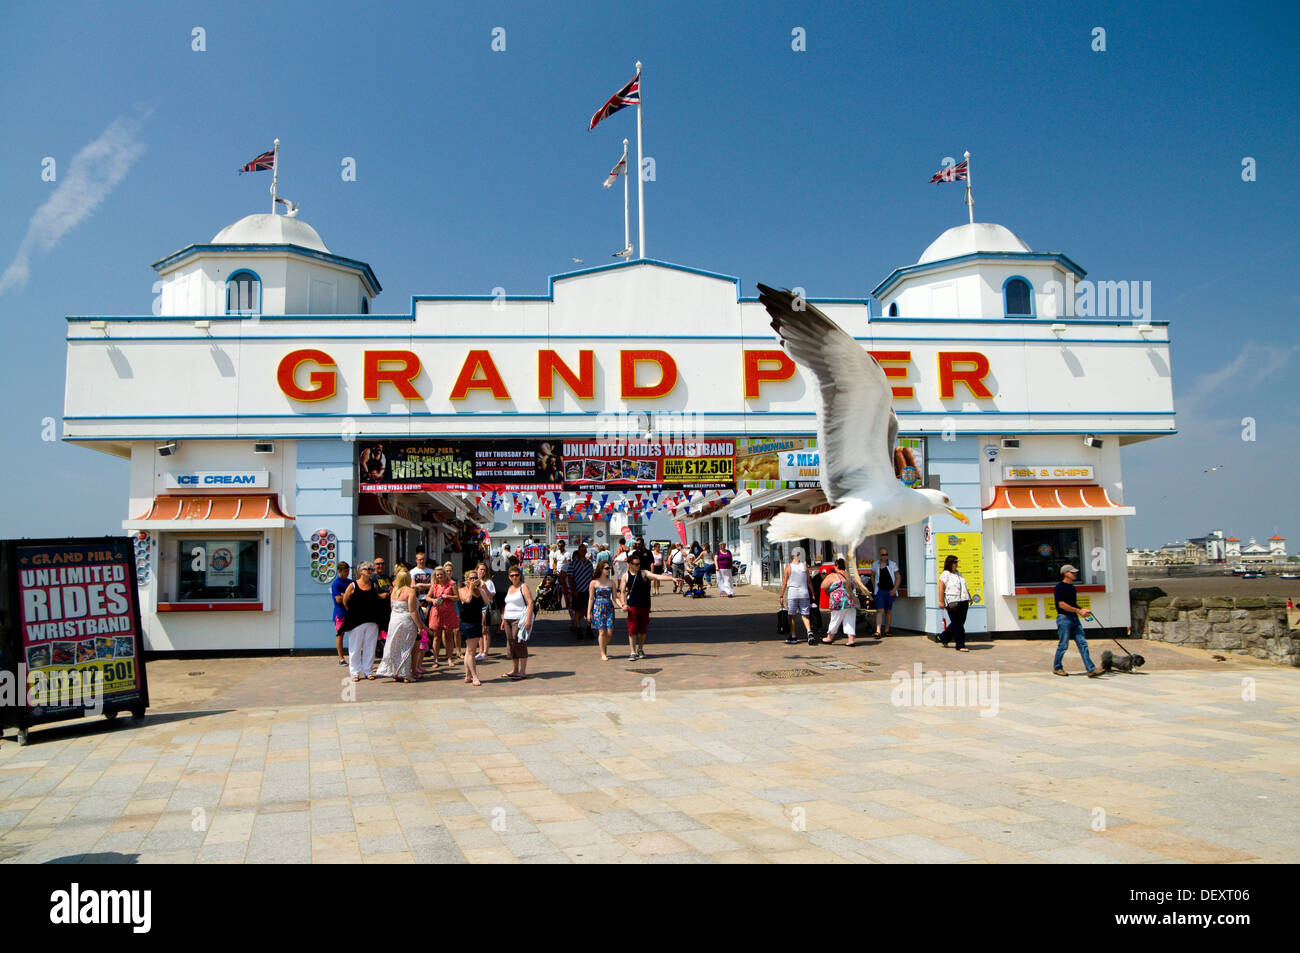 Grand Pier, Weston-Super-Mare, Somerset, England. Stock Photo